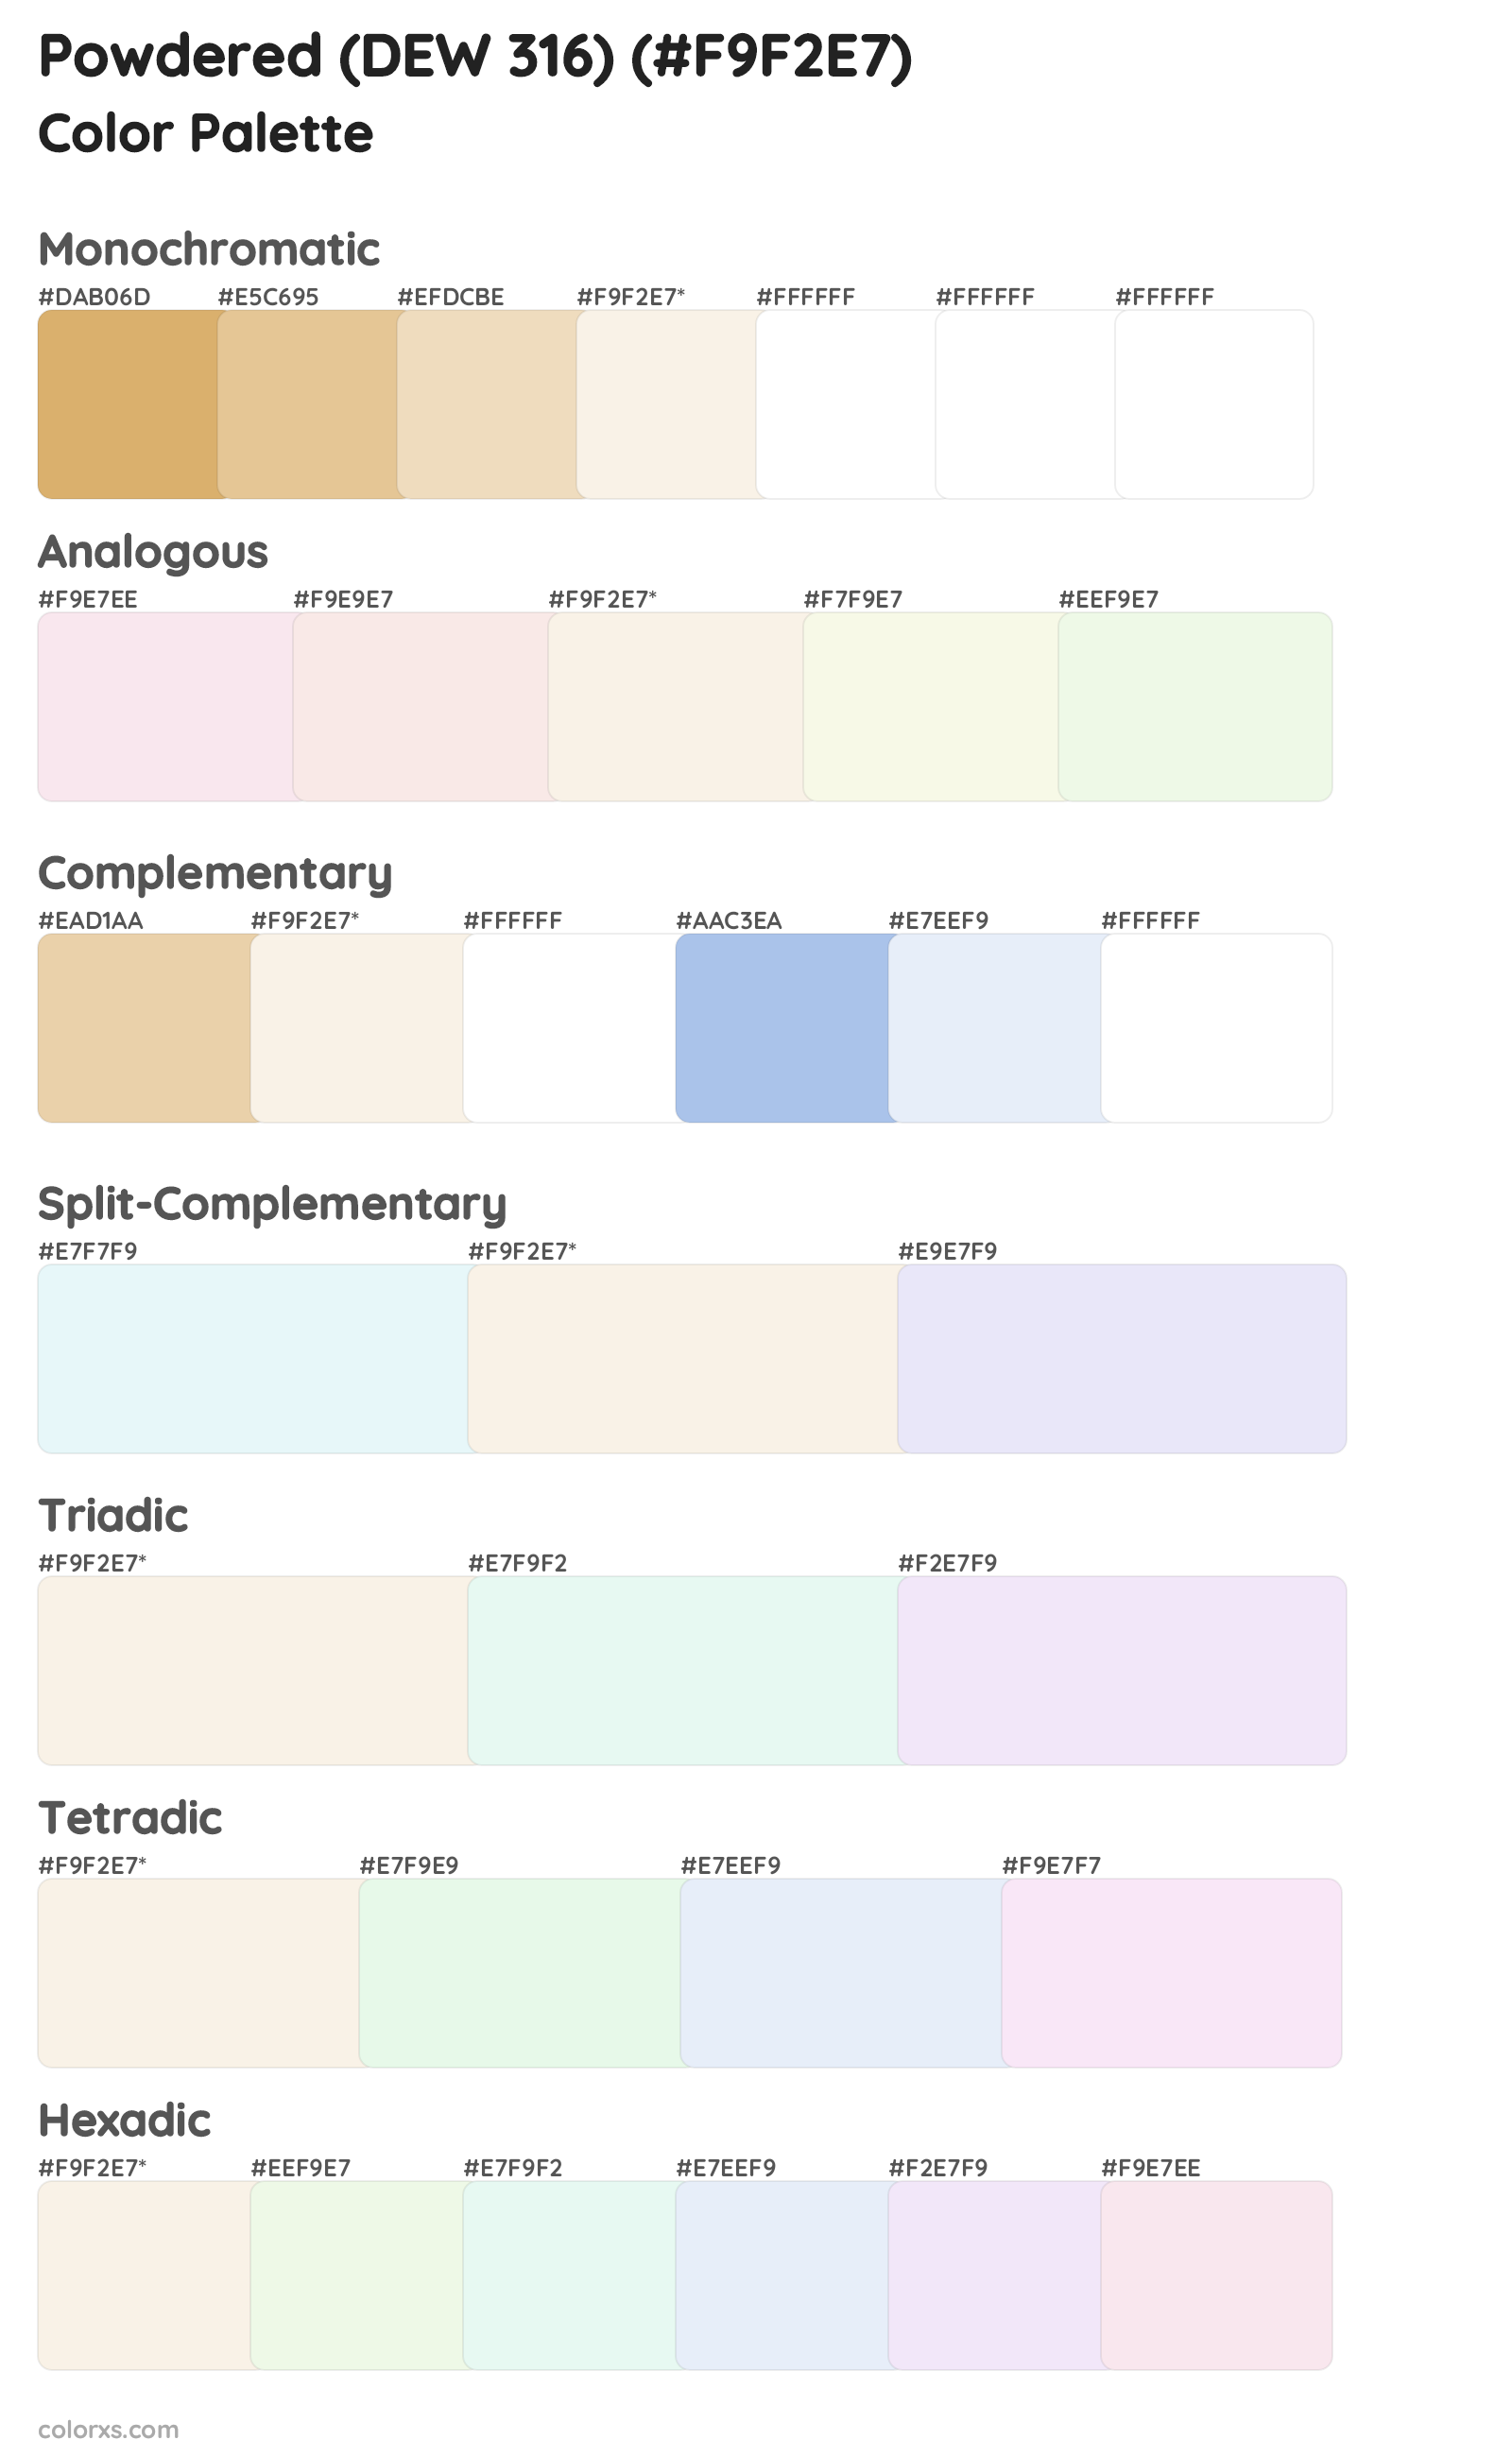 Powdered (DEW 316) Color Scheme Palettes